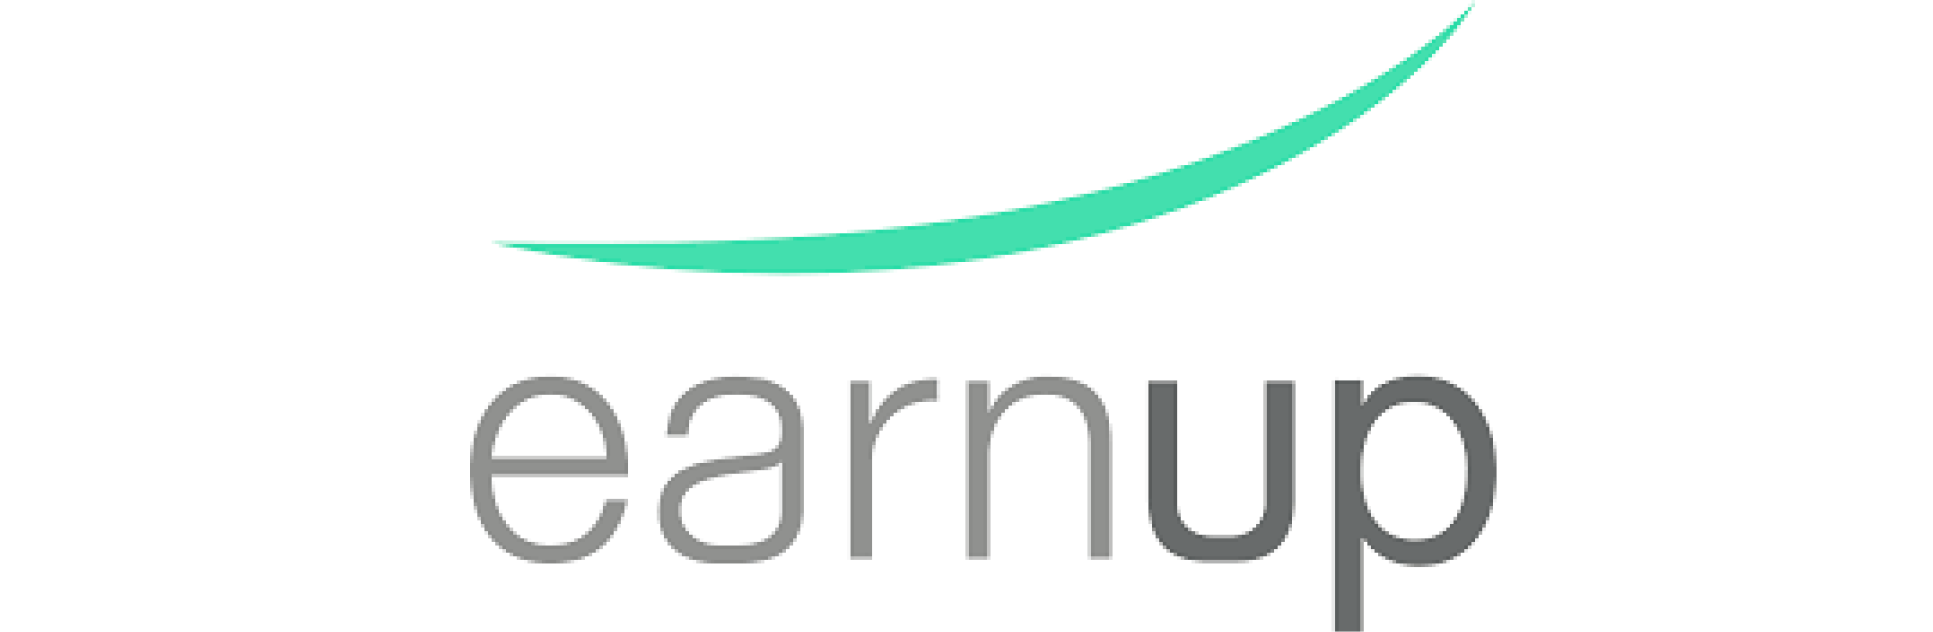 earnup logo.png